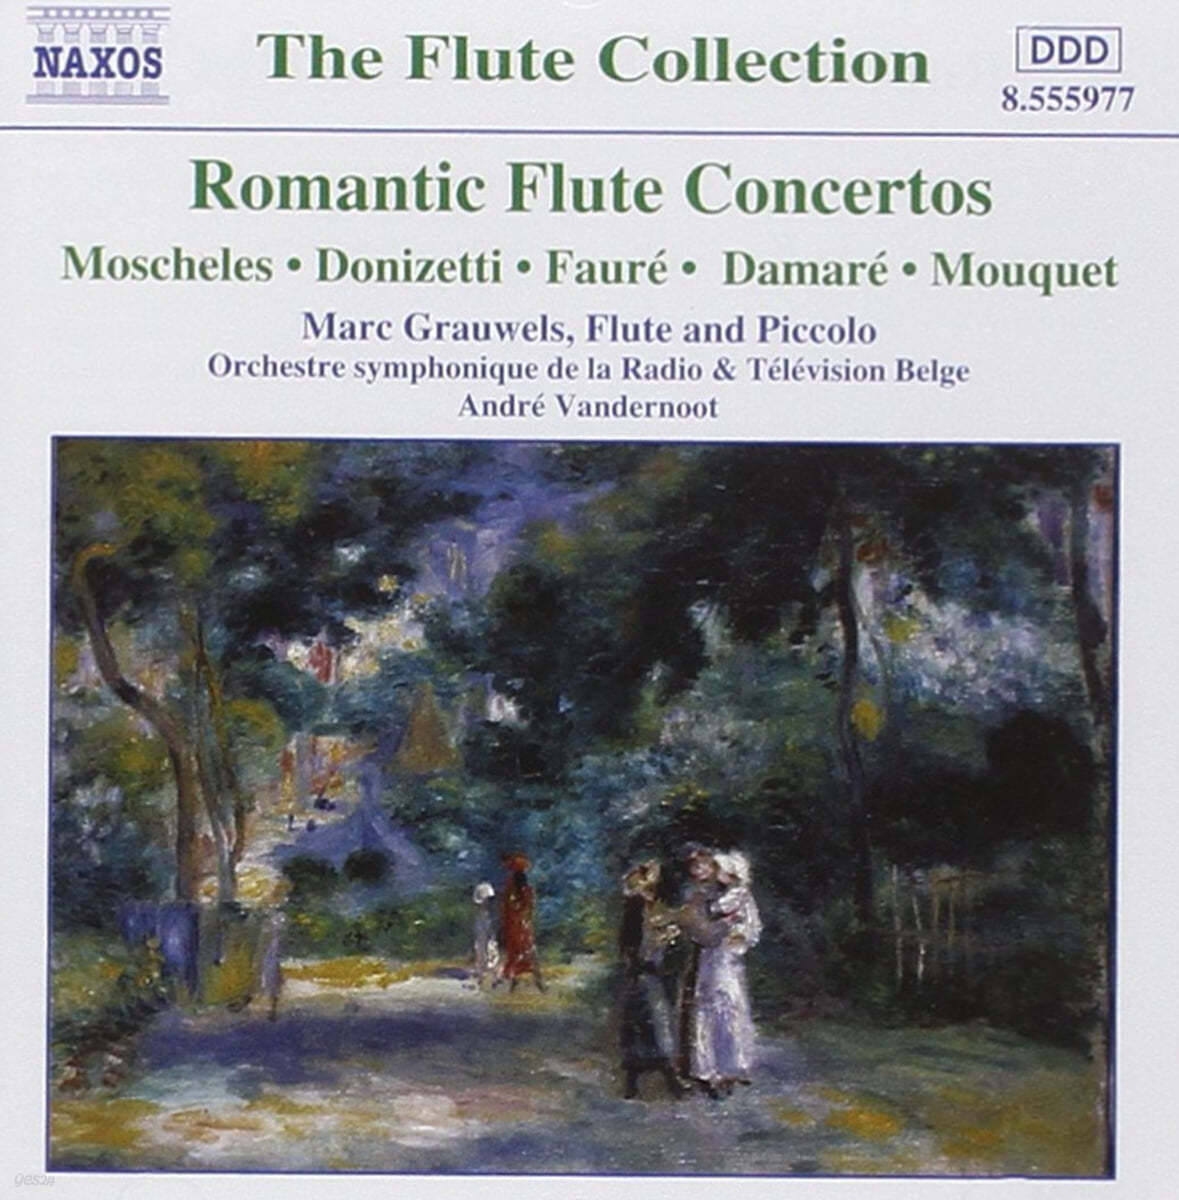 Marc Grauwels 로맨틱 플루트 협주곡 모음 (Romantic Flute Concerto) 